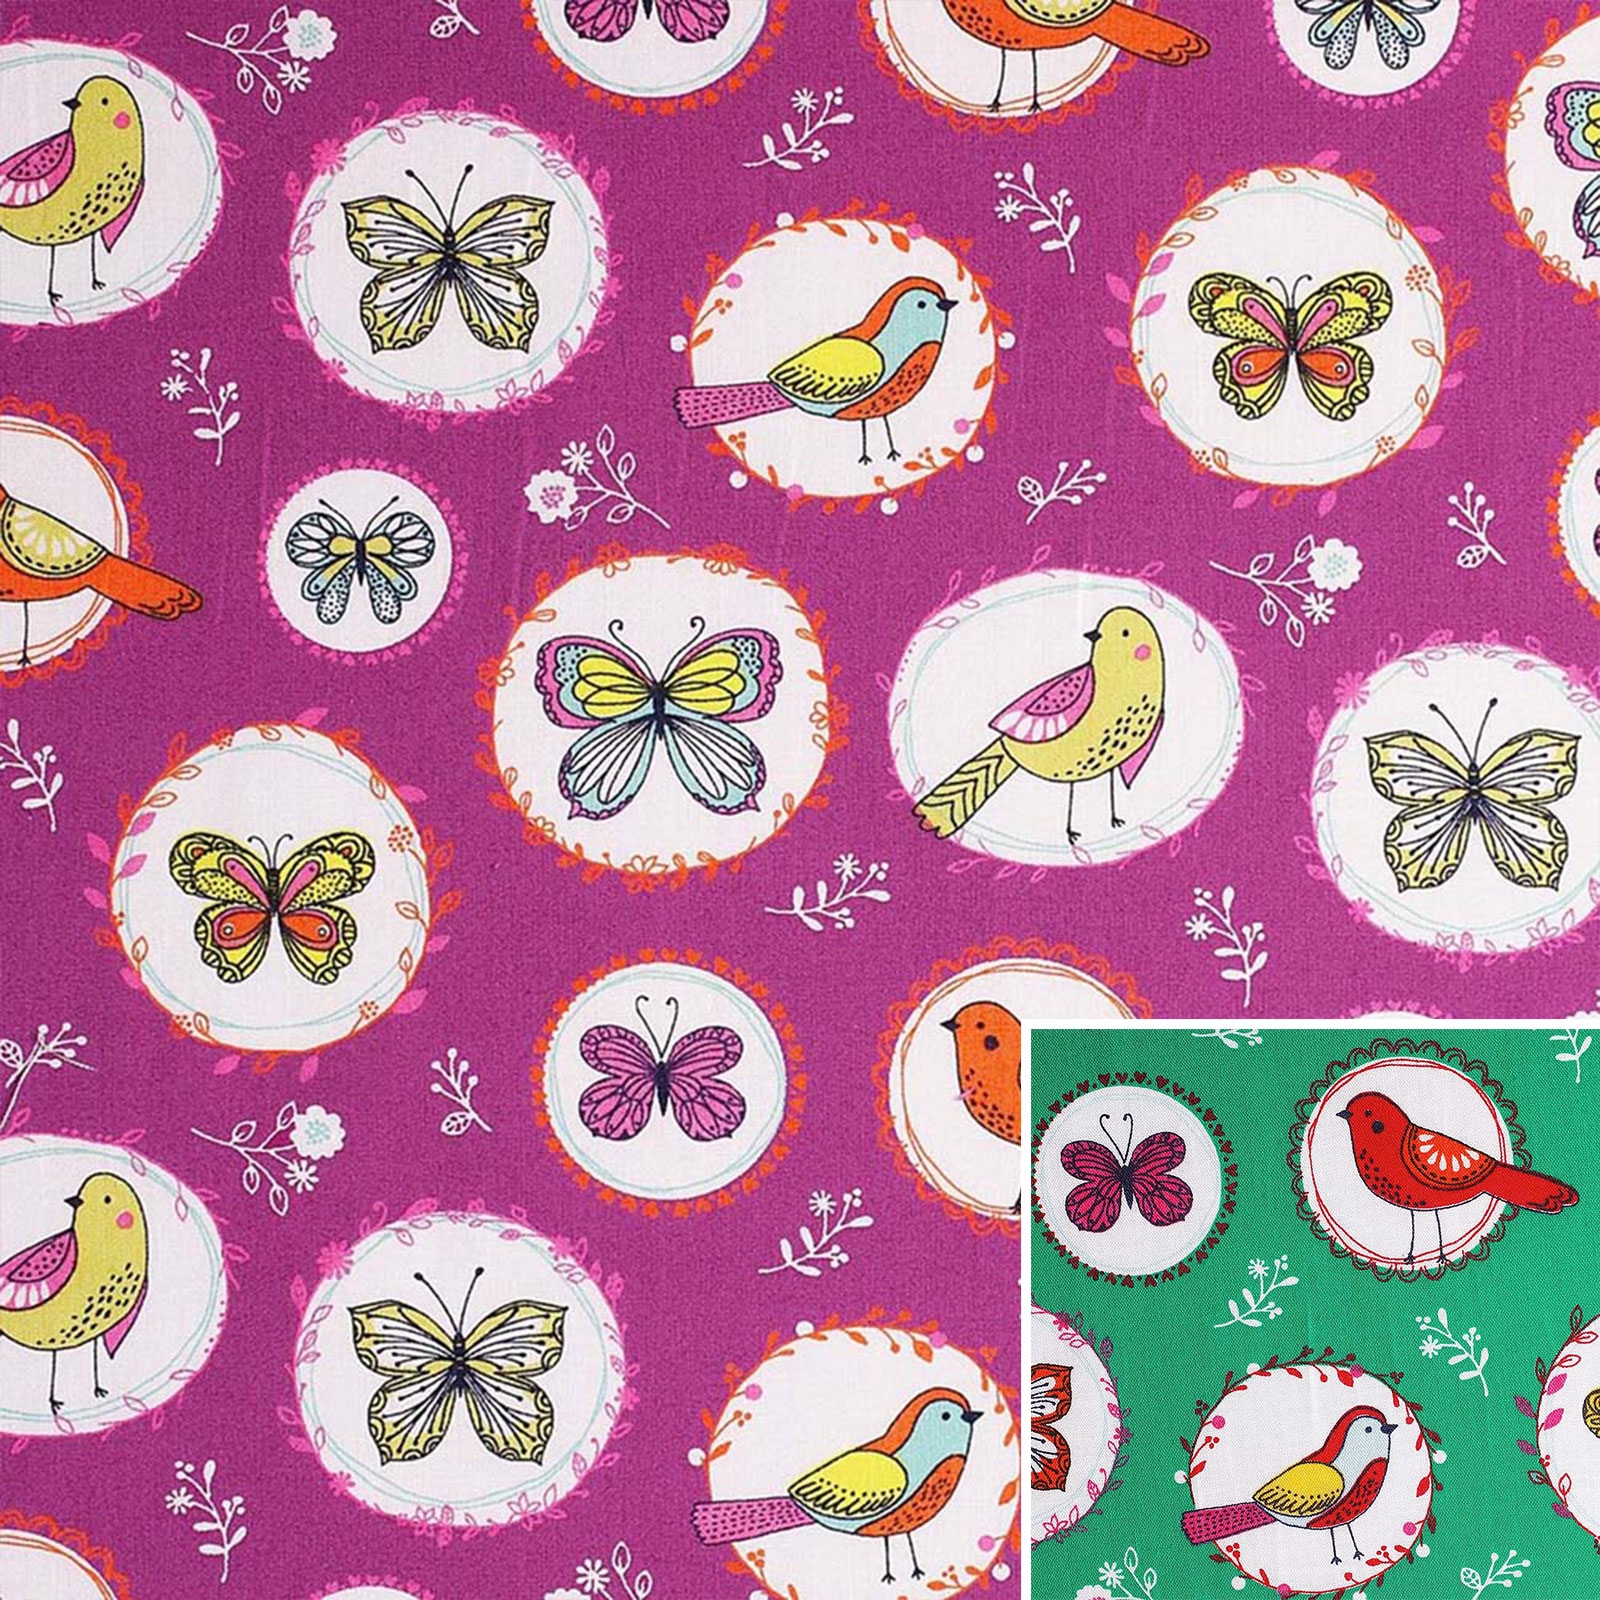 Birdy - Cotton fabric with birds & butterflies